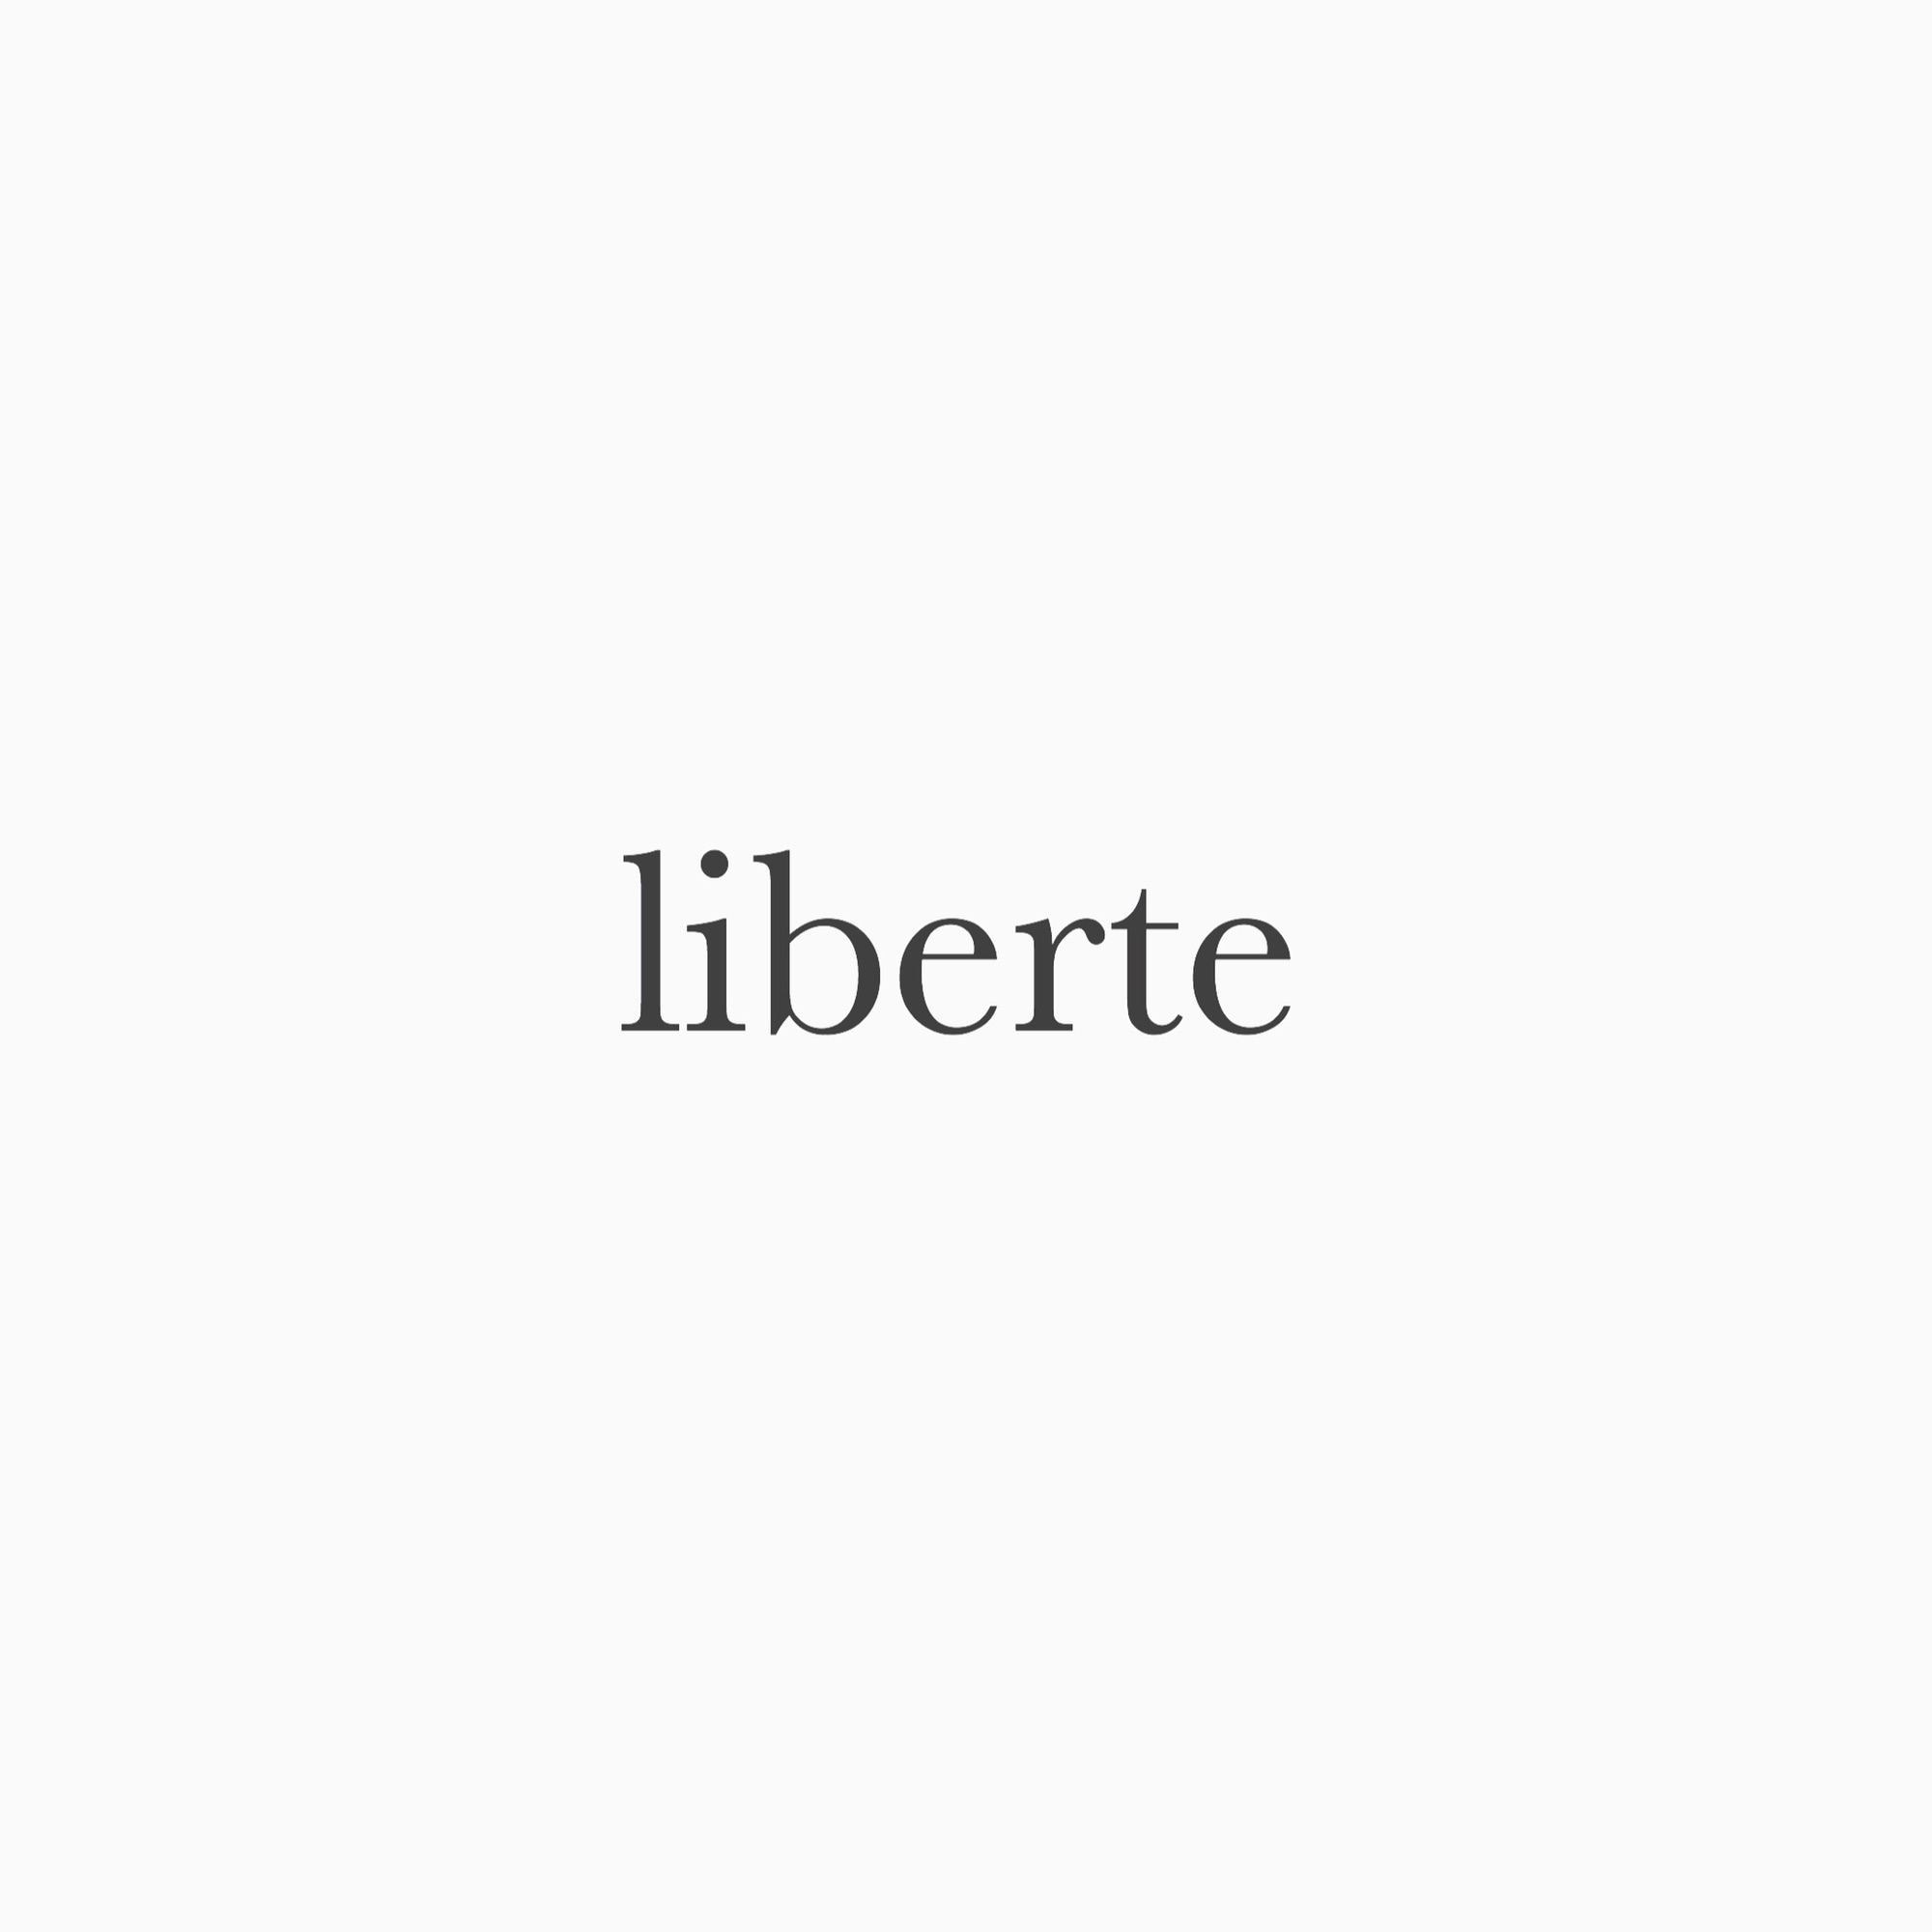 liberte LLC,